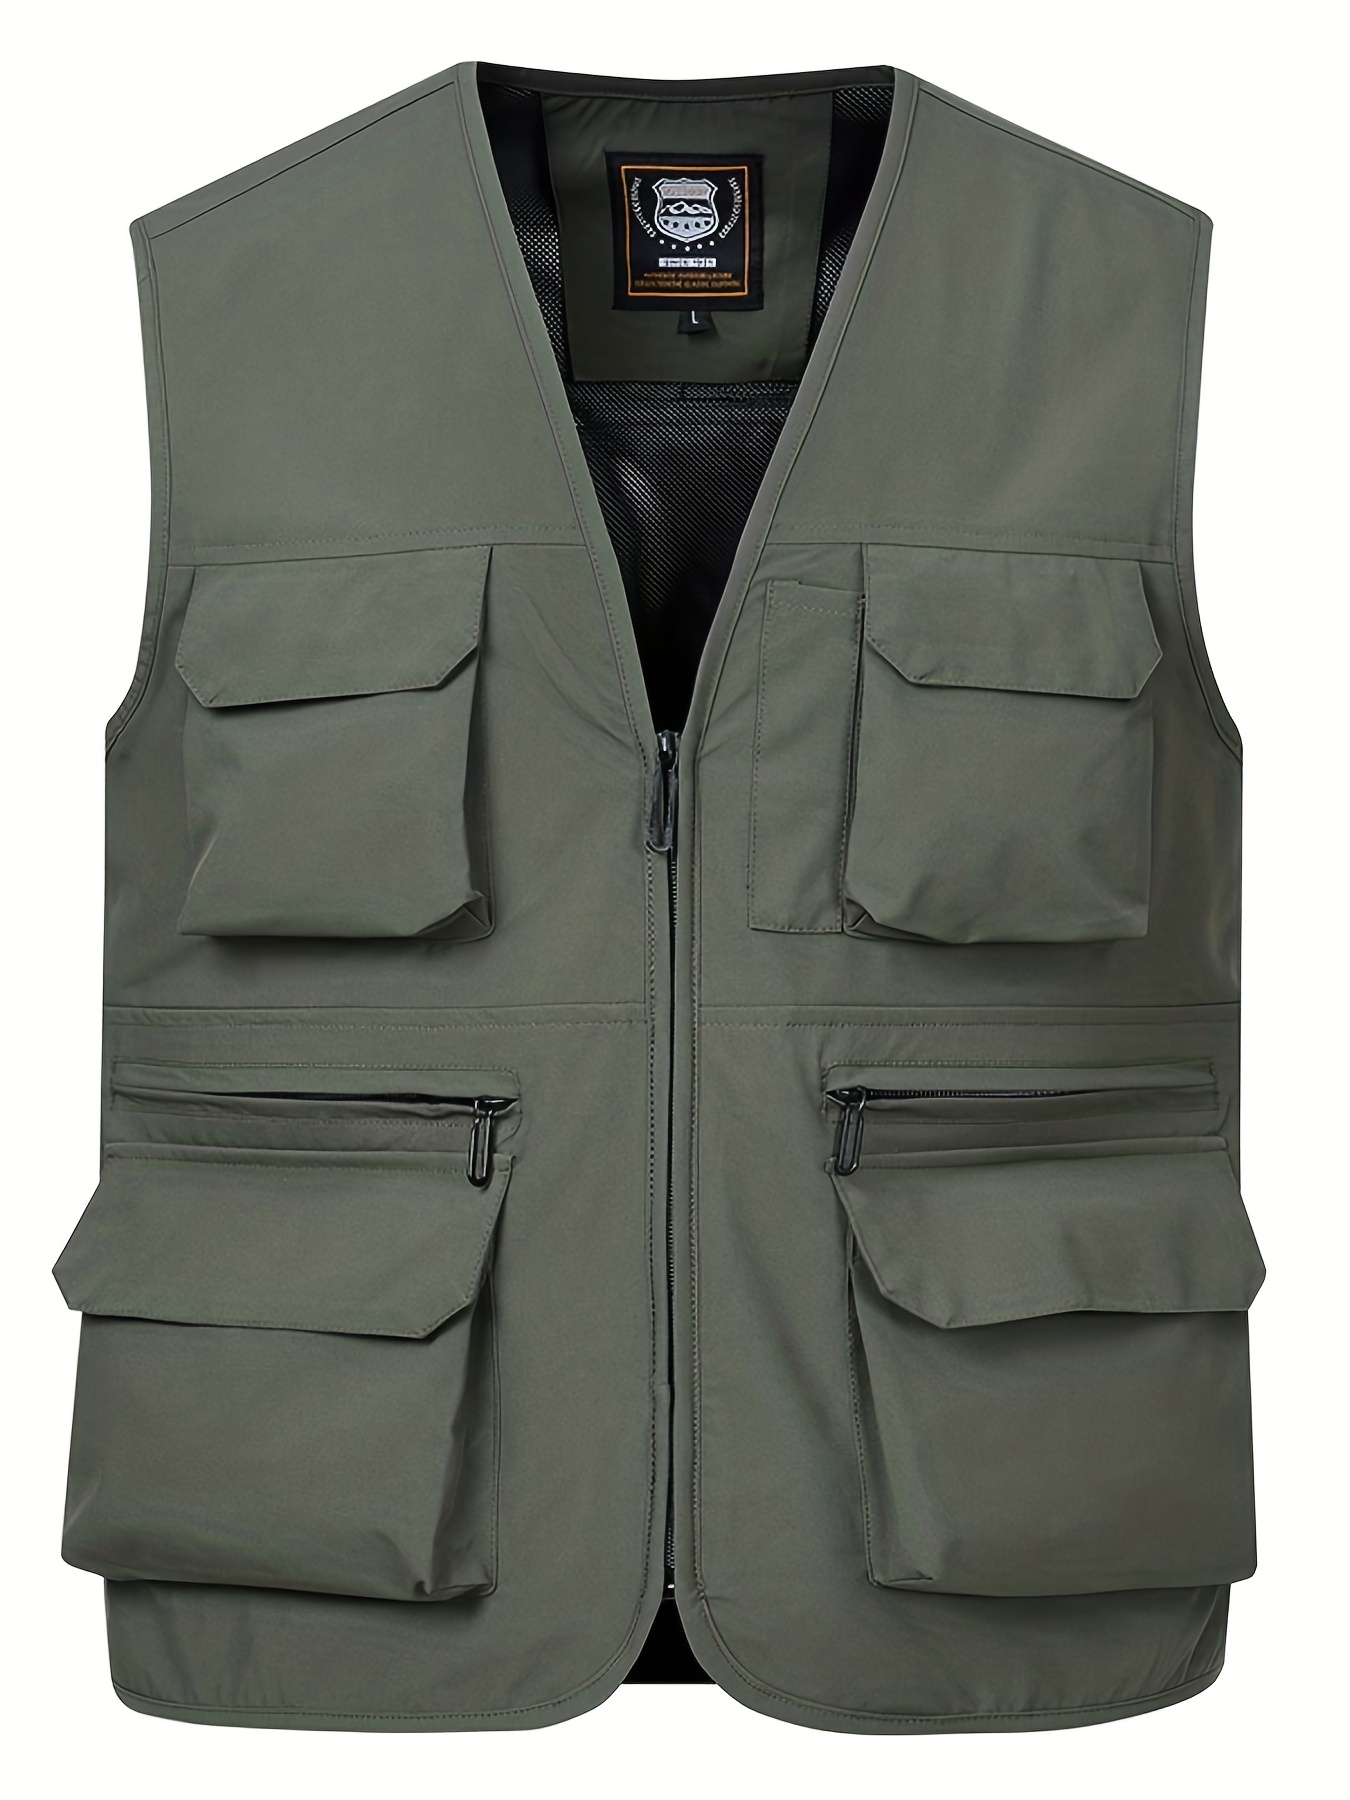 Chalecos de ropa exterior para hombres Casual Trabajo al aire libre Safari Chaleco  de pesca Ligero Travel Photo Cargo Vest Chaqueta